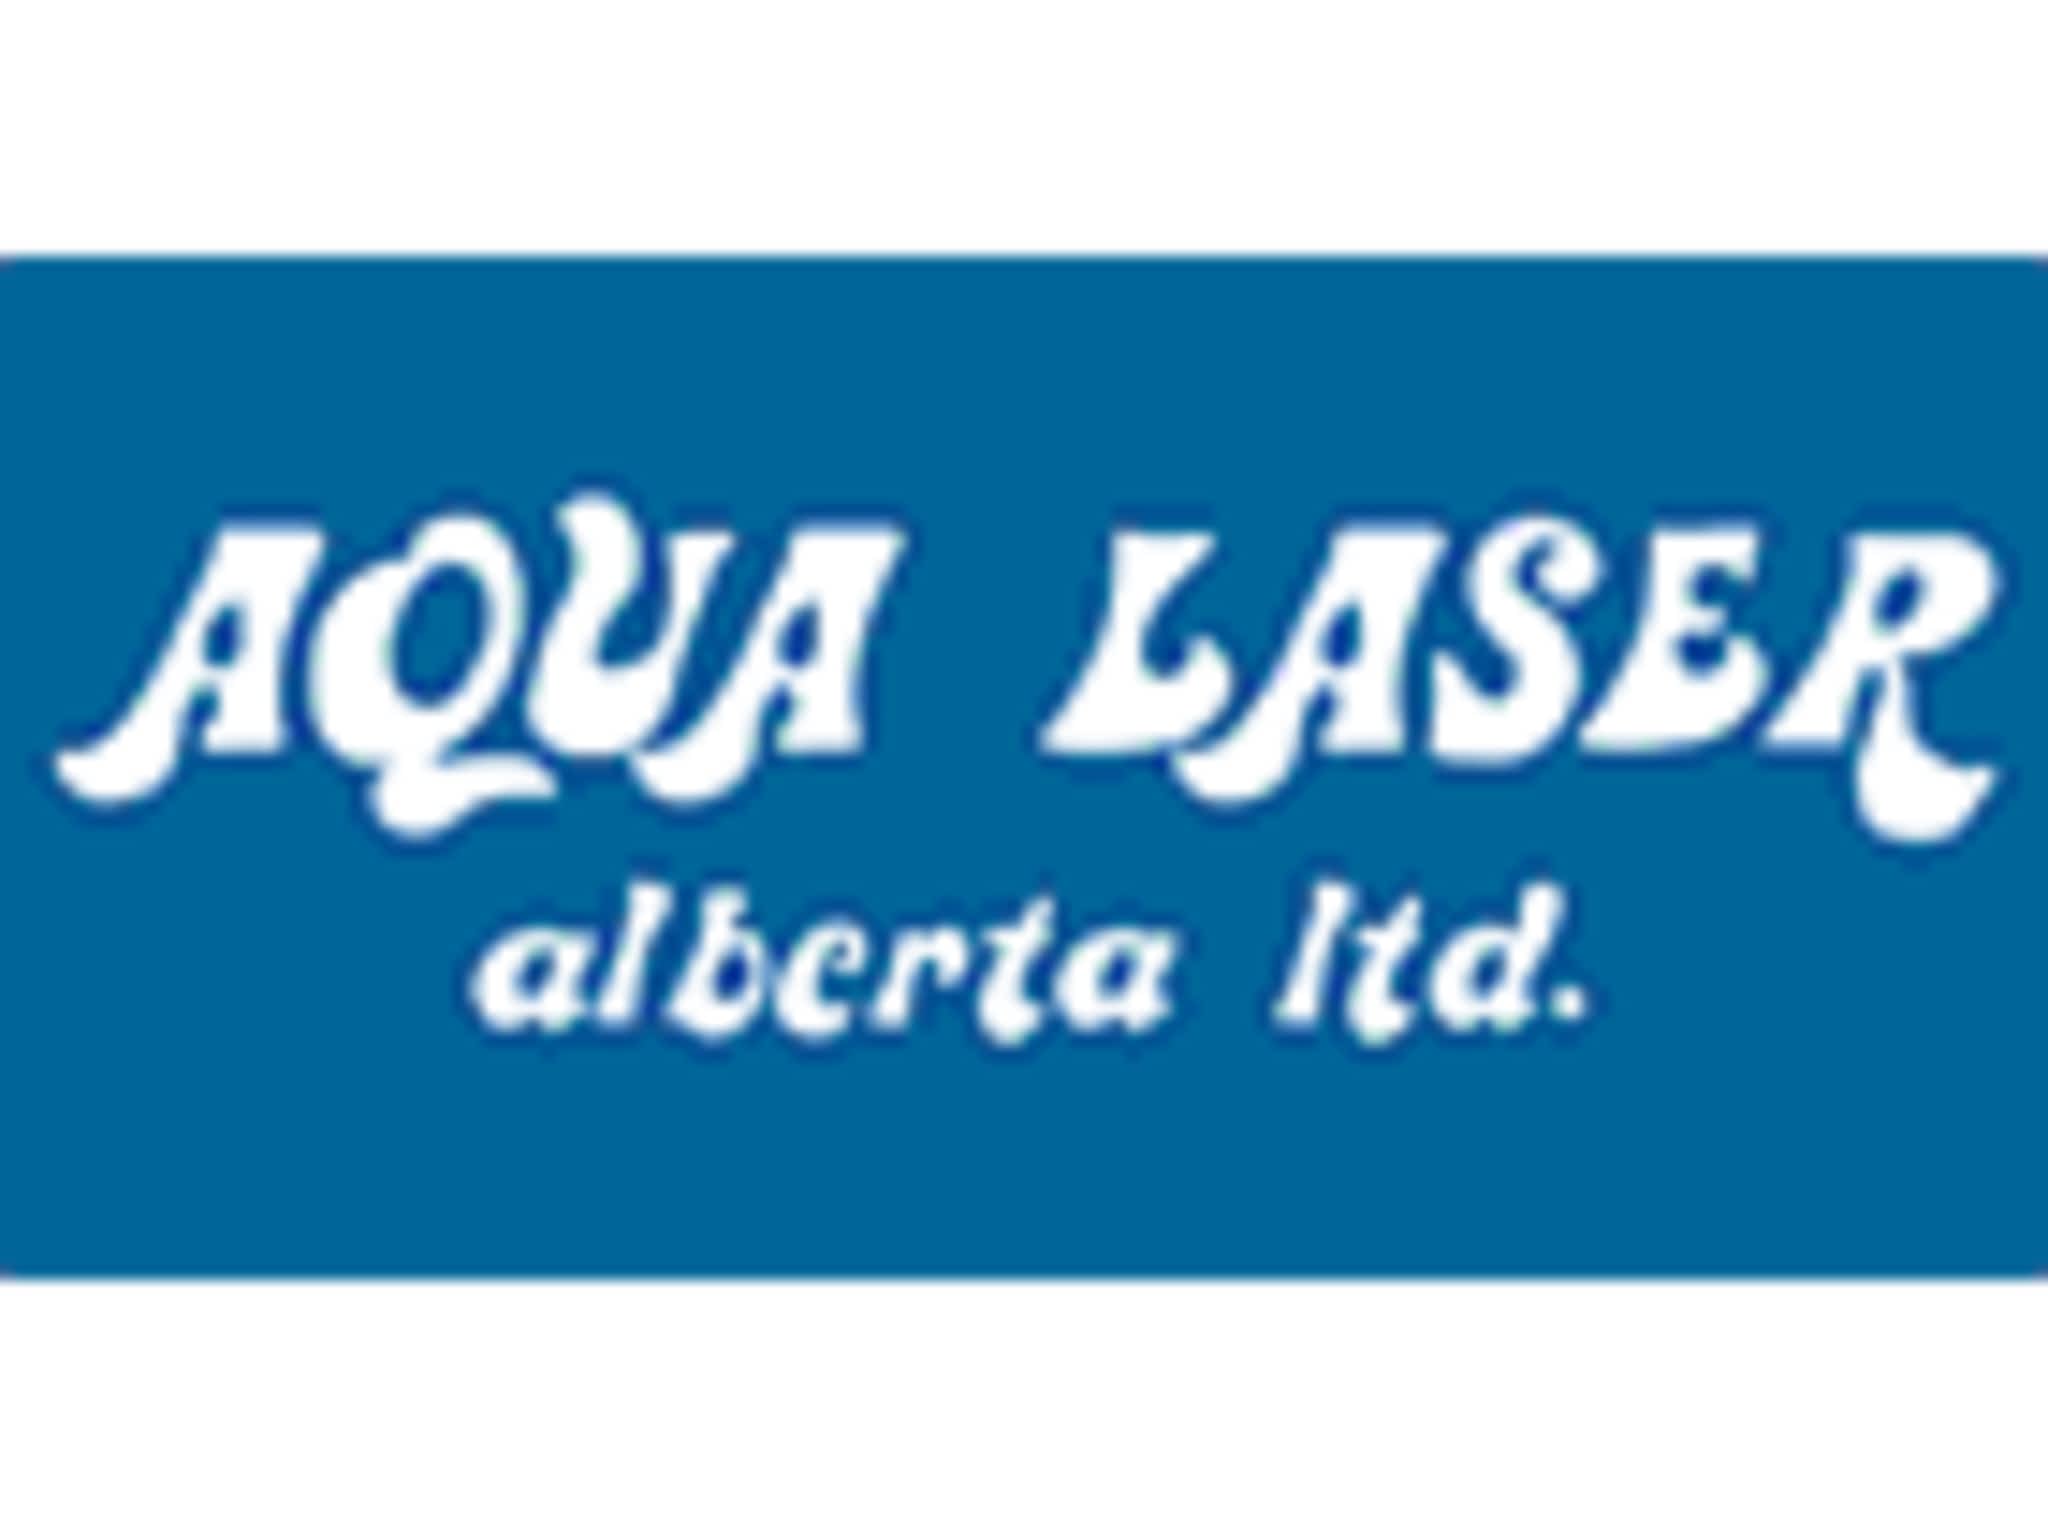 photo Aqua Laser Alberta Ltd